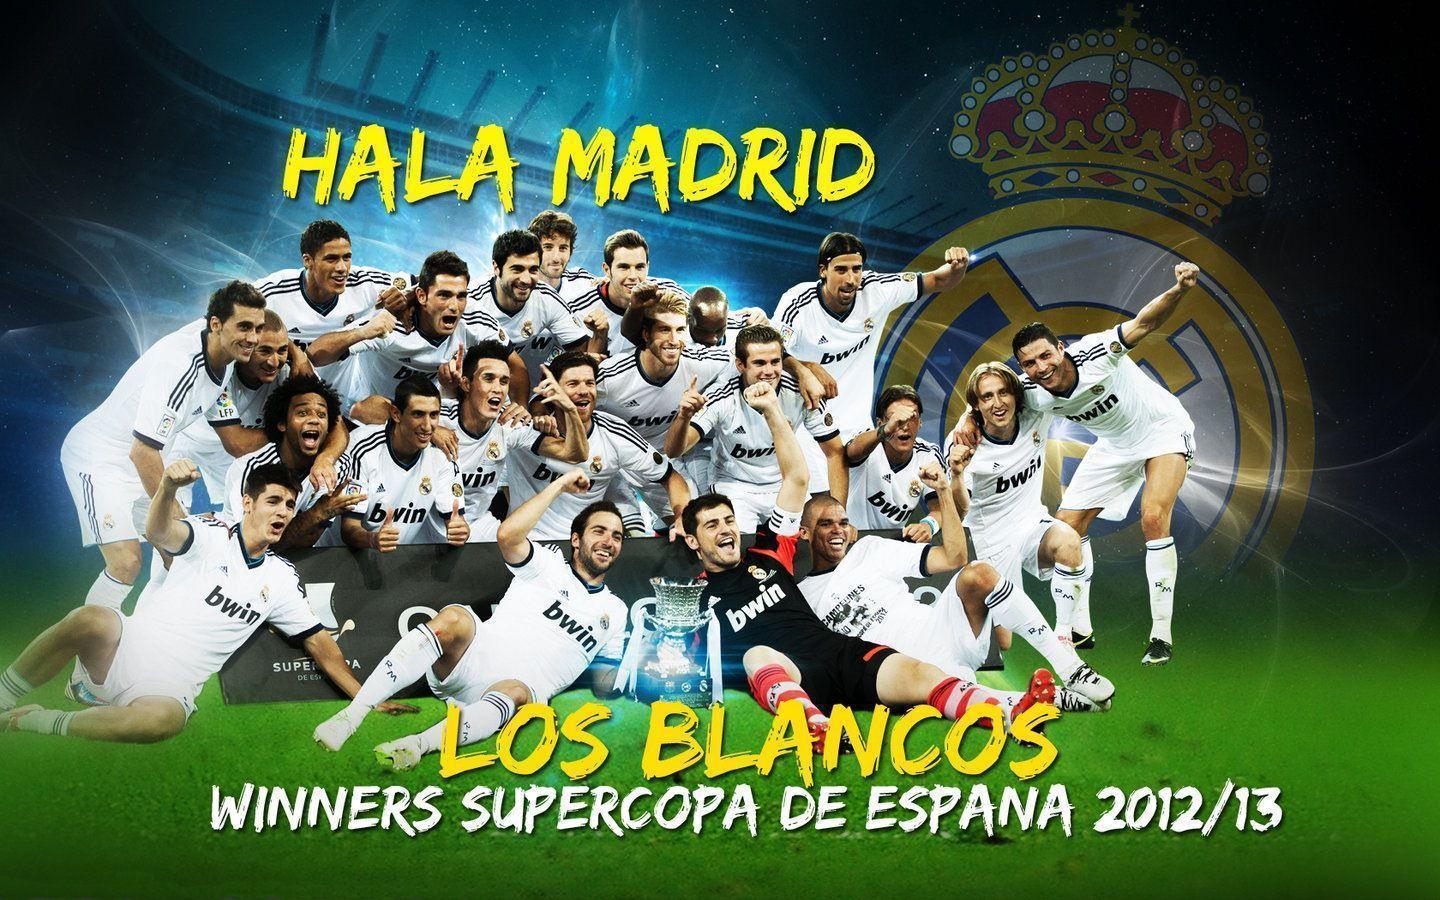 Real Madrid Team Wallpaper 2013 6. The Art Mad